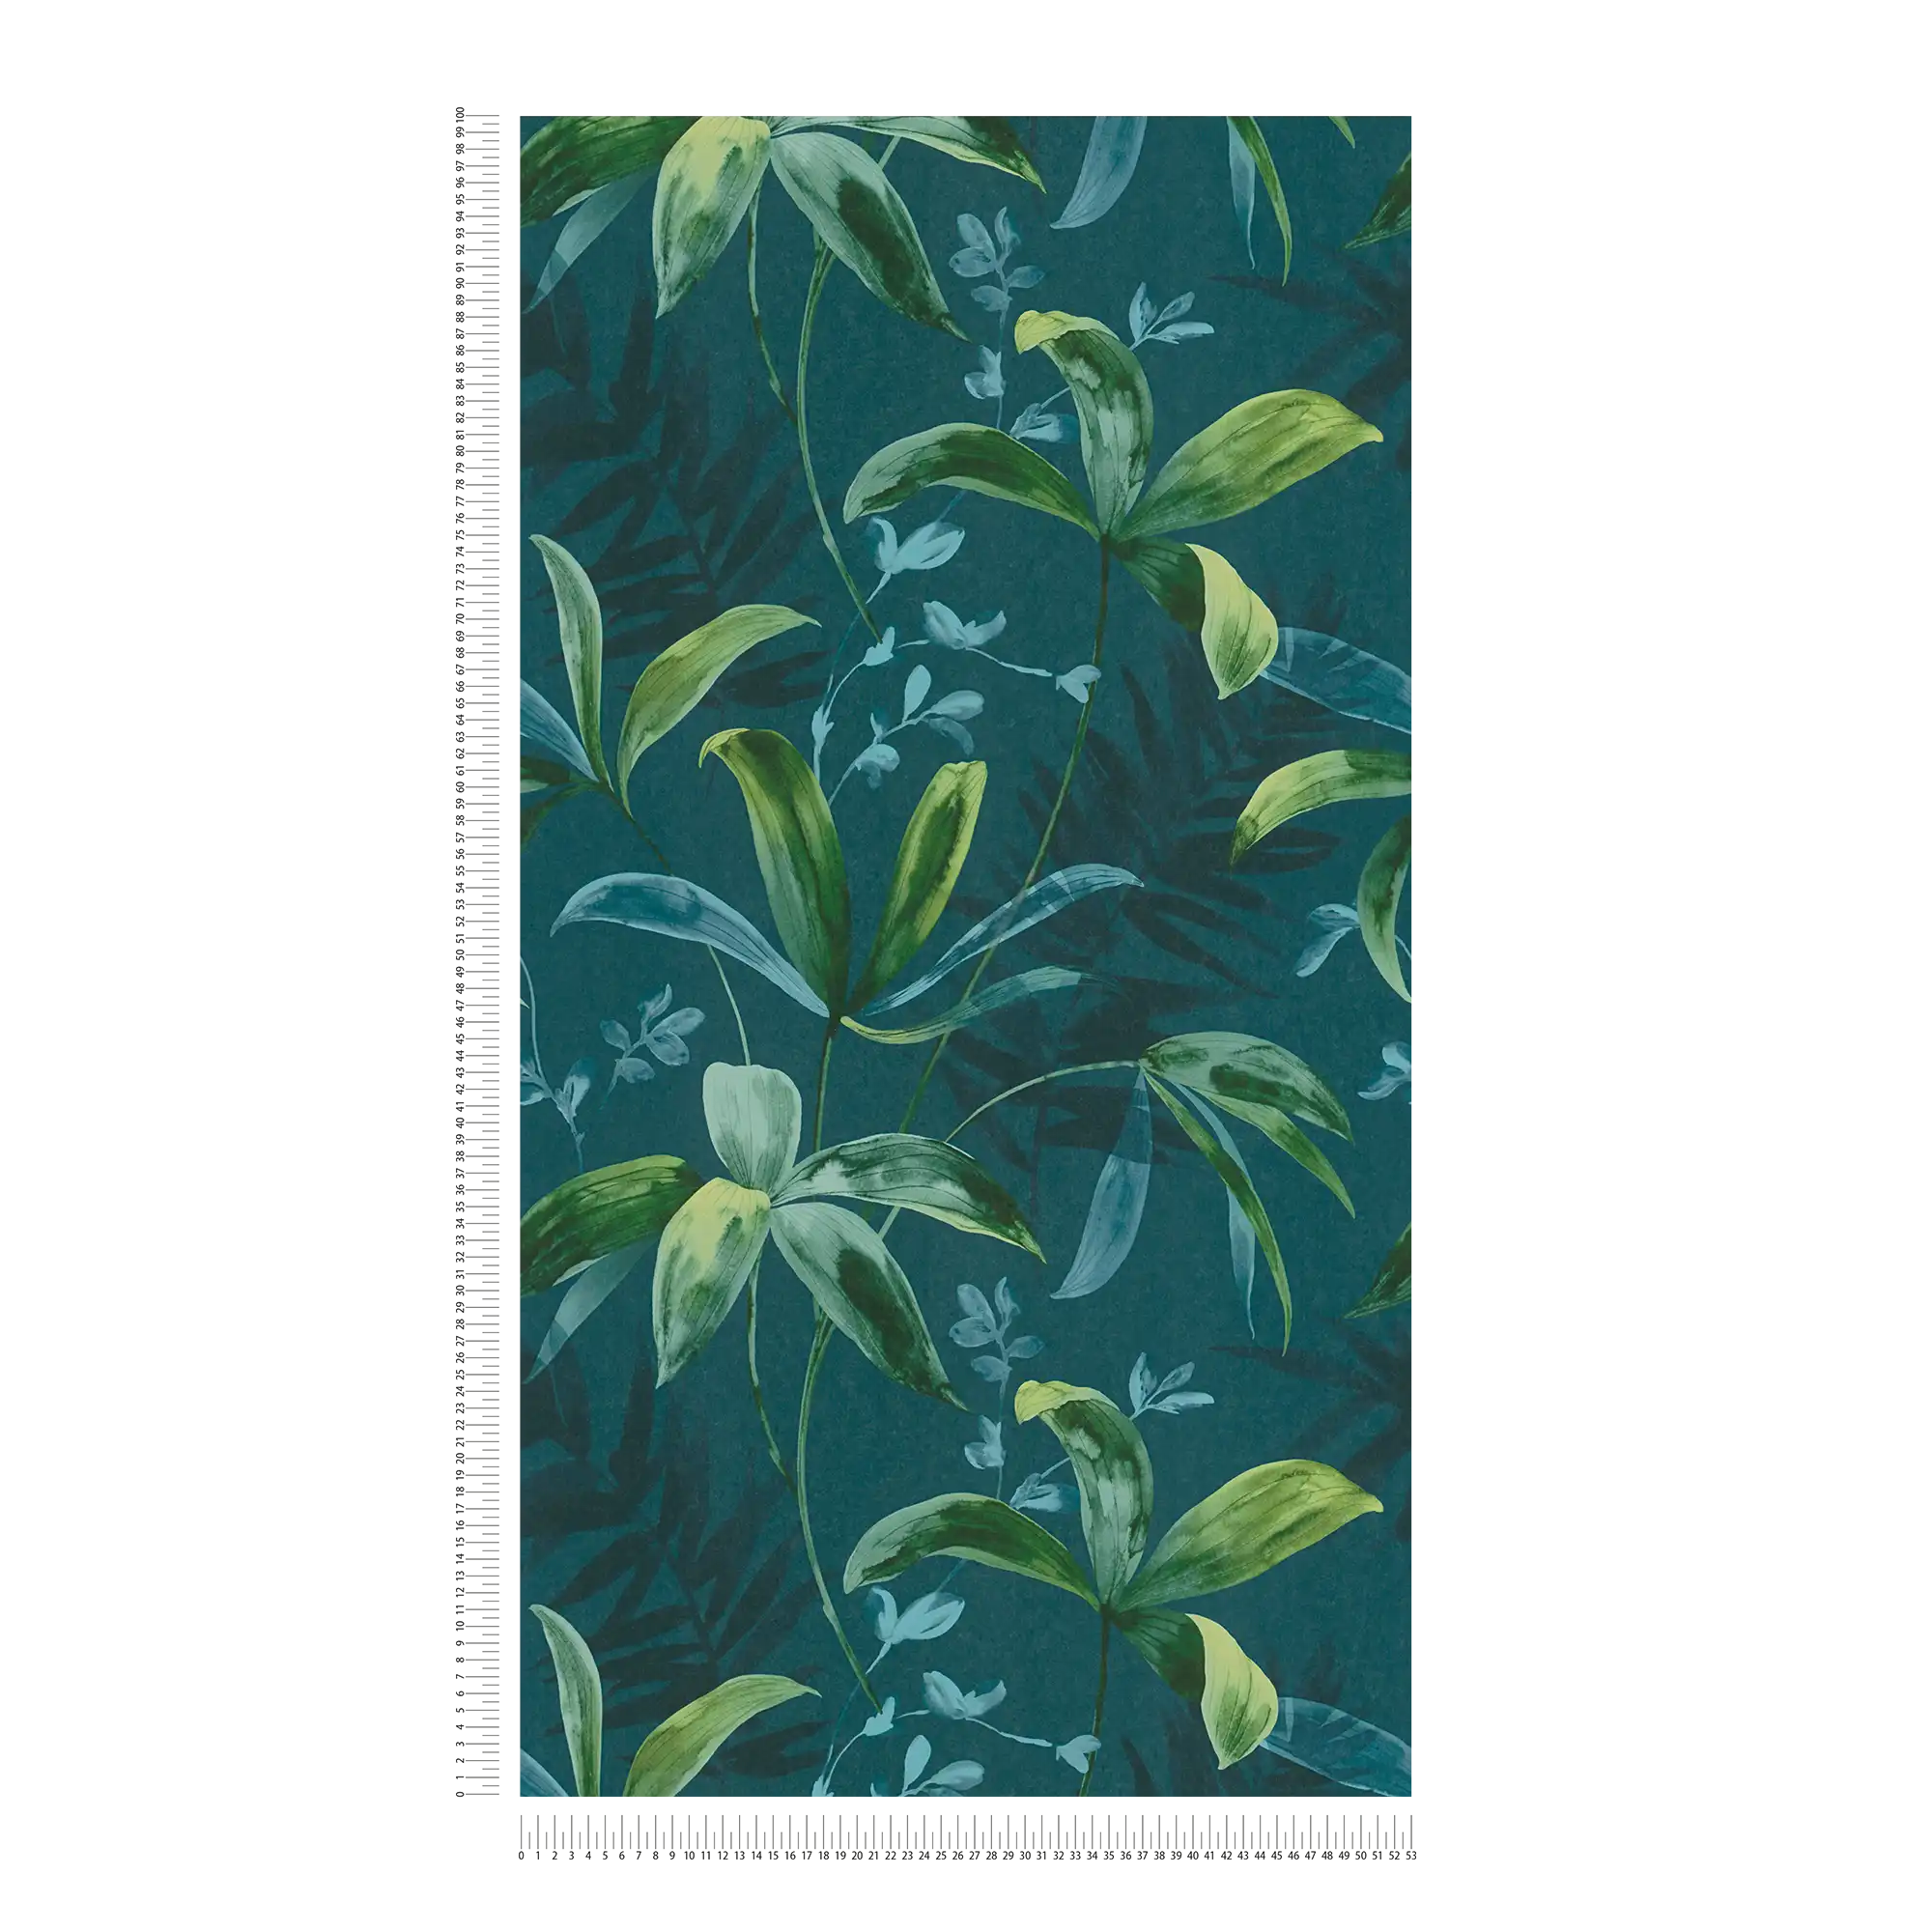             Papel pintado verde oscuro con motivo de hojas en estilo acuarela - Azul, Verde
        